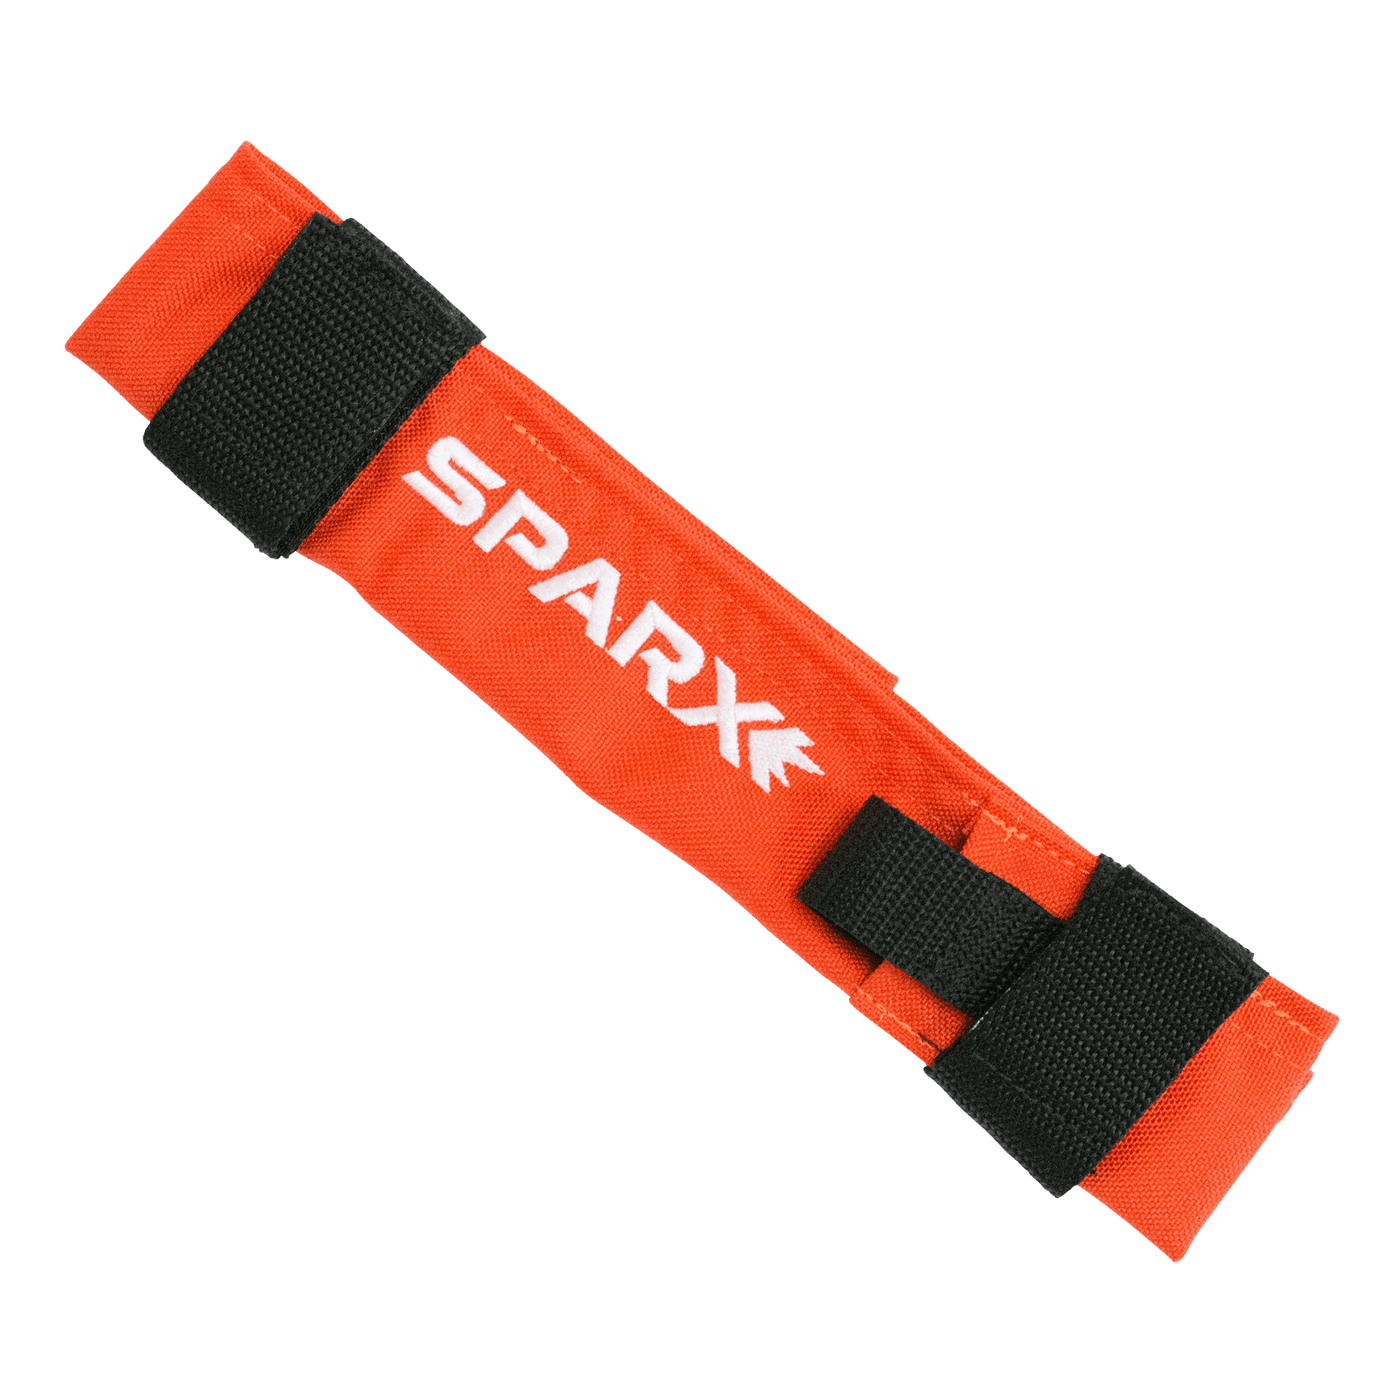 Sparx Blade Buddy - a red blade pouch. Blade pouch, steel holder, spare steel, spare blades.